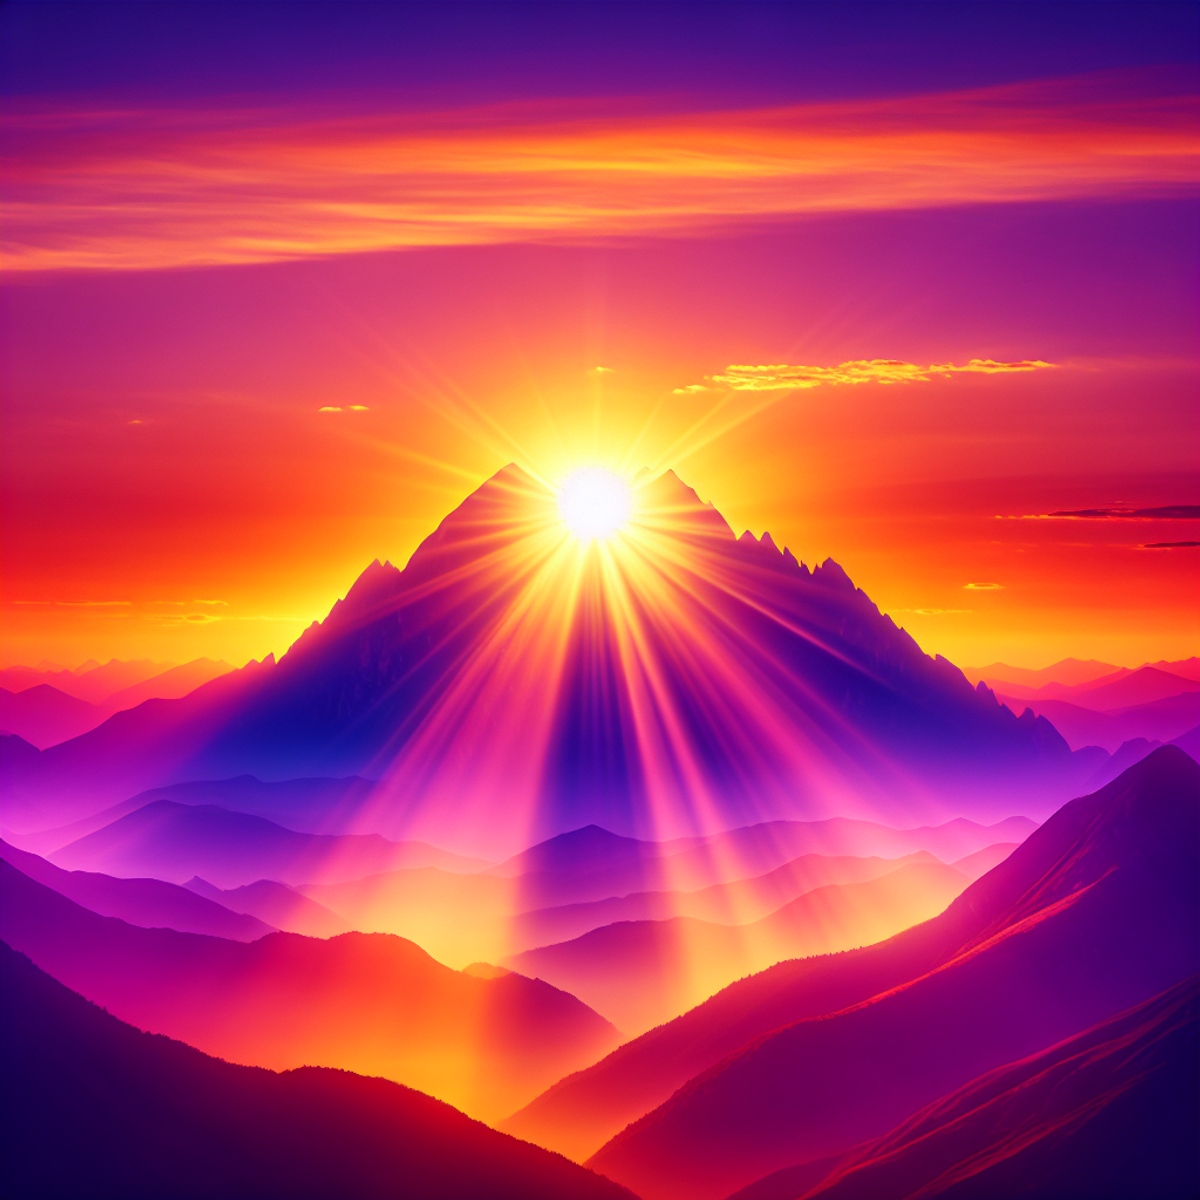 A sunrise over a mountain peak, symbolizing renewal and hope.